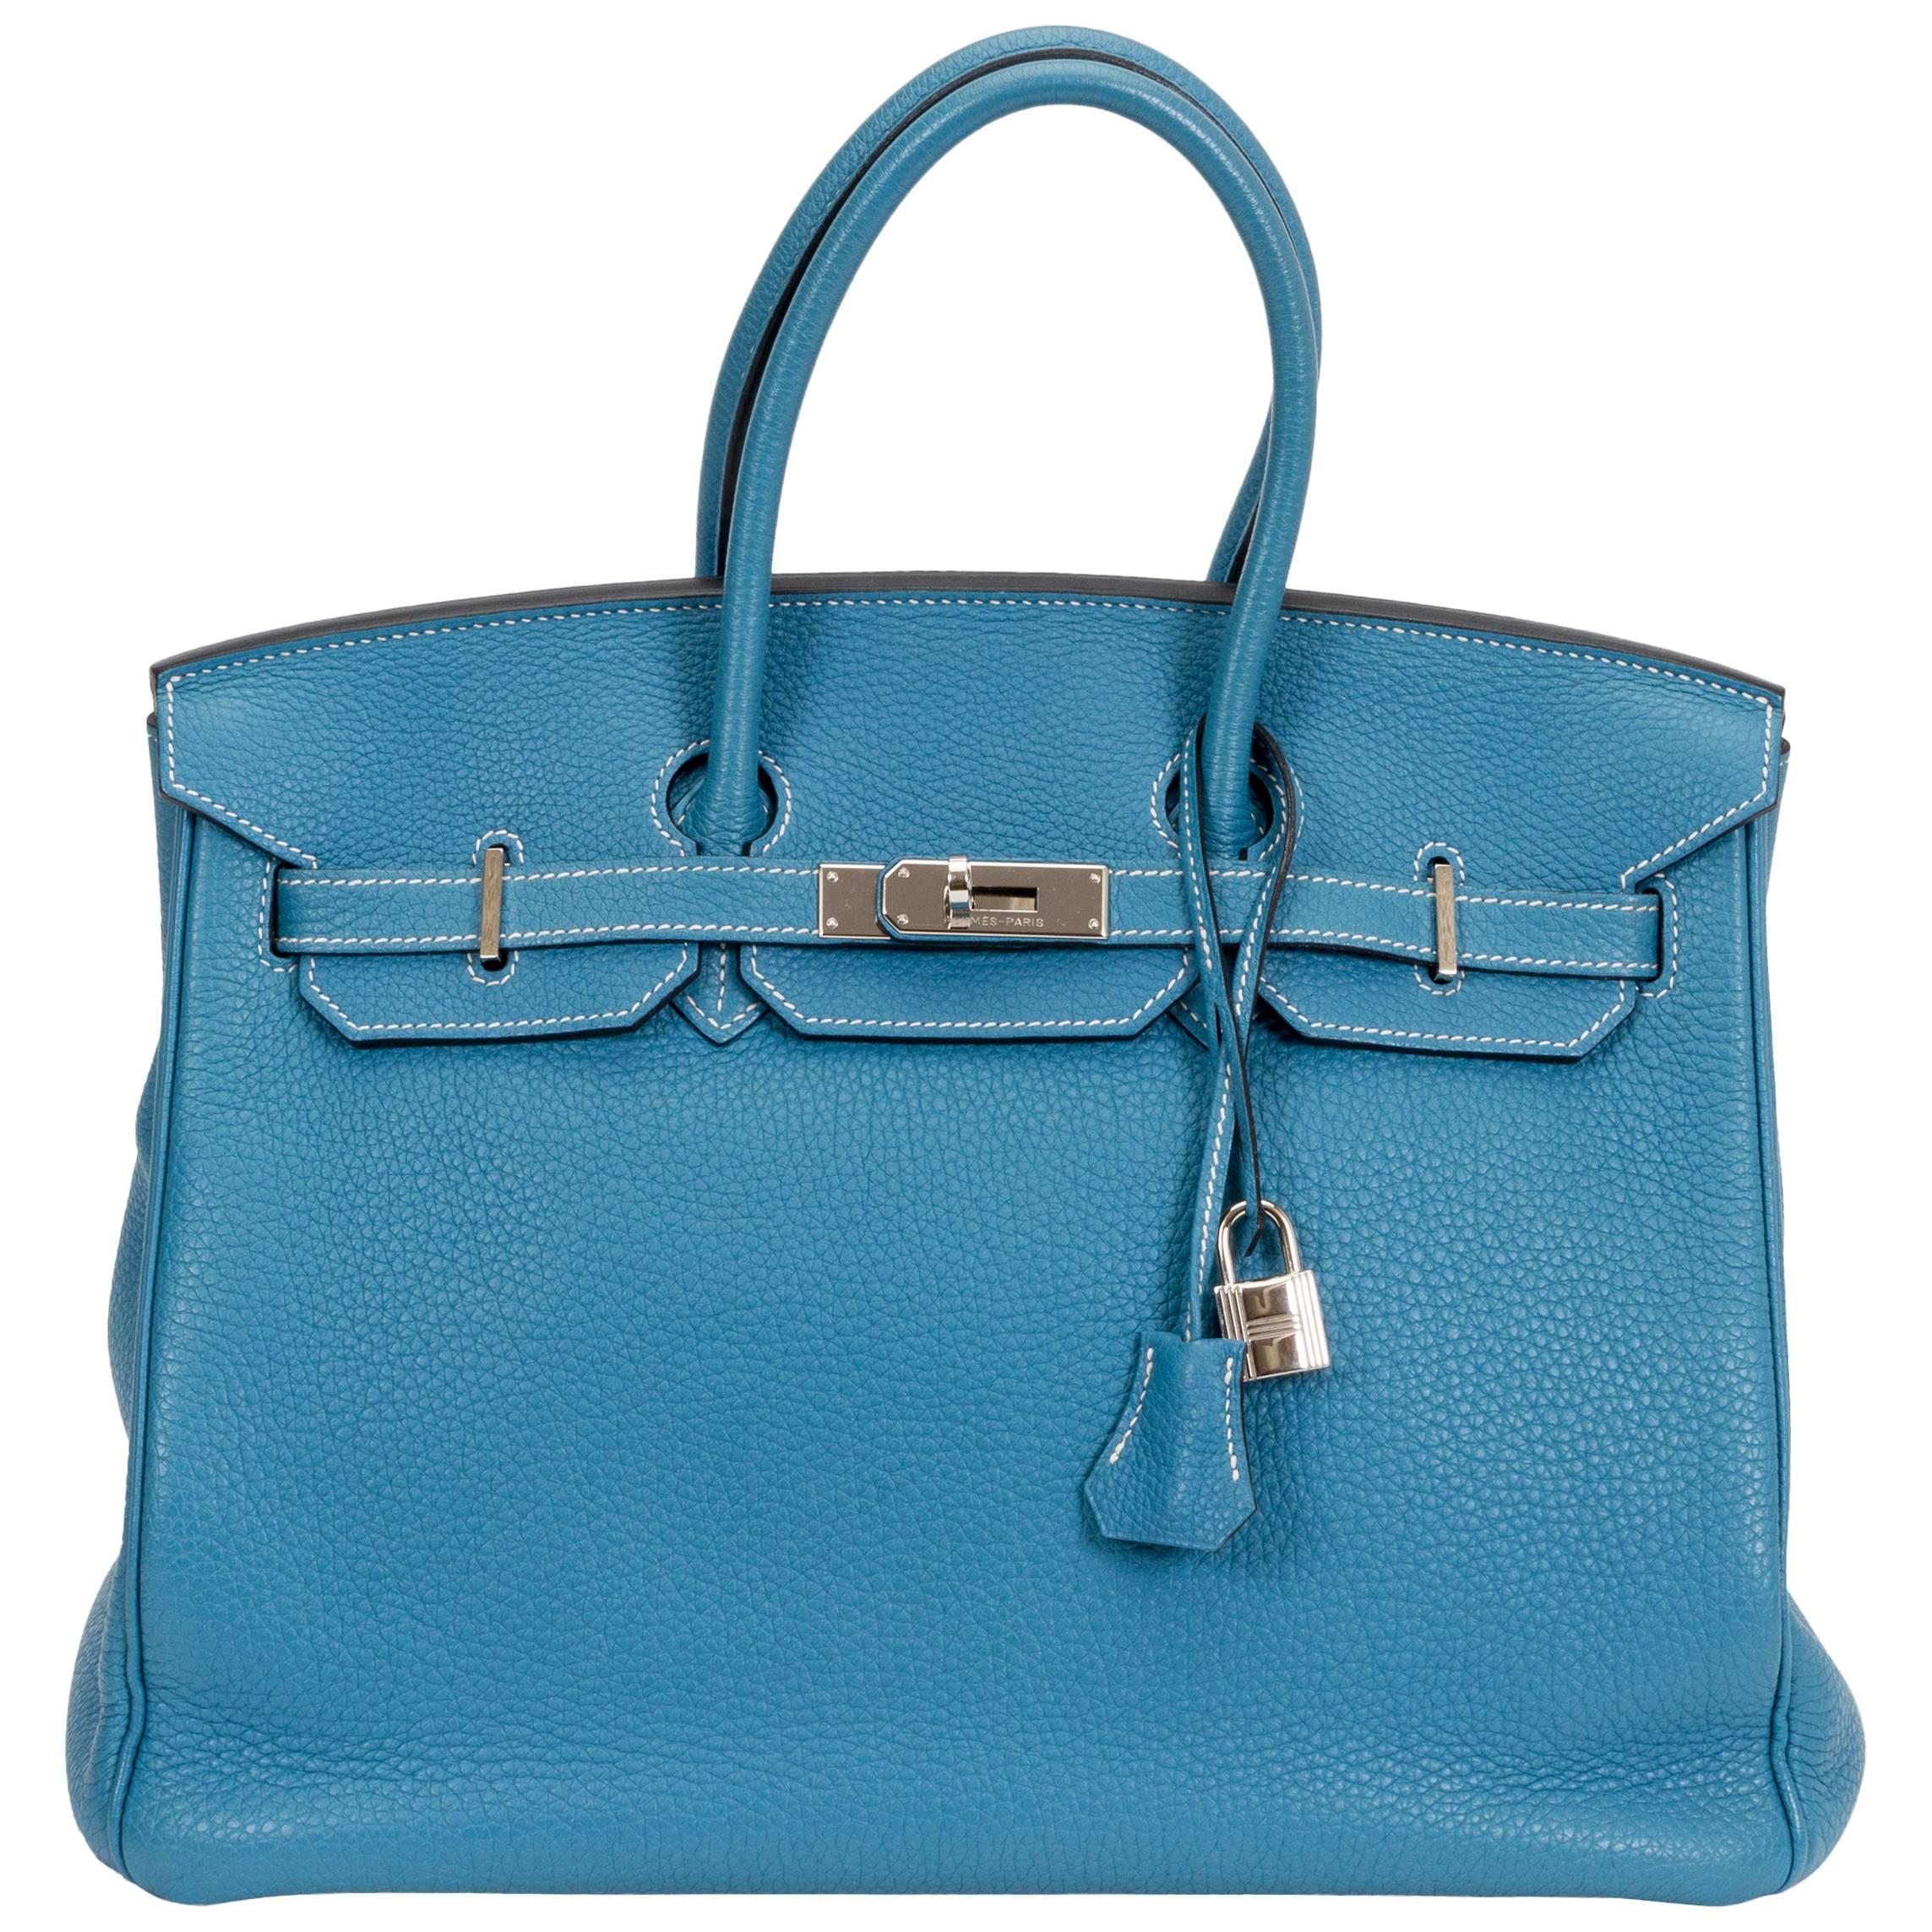  Hermès 35cm Blue Jean Clemence Birkin Bag